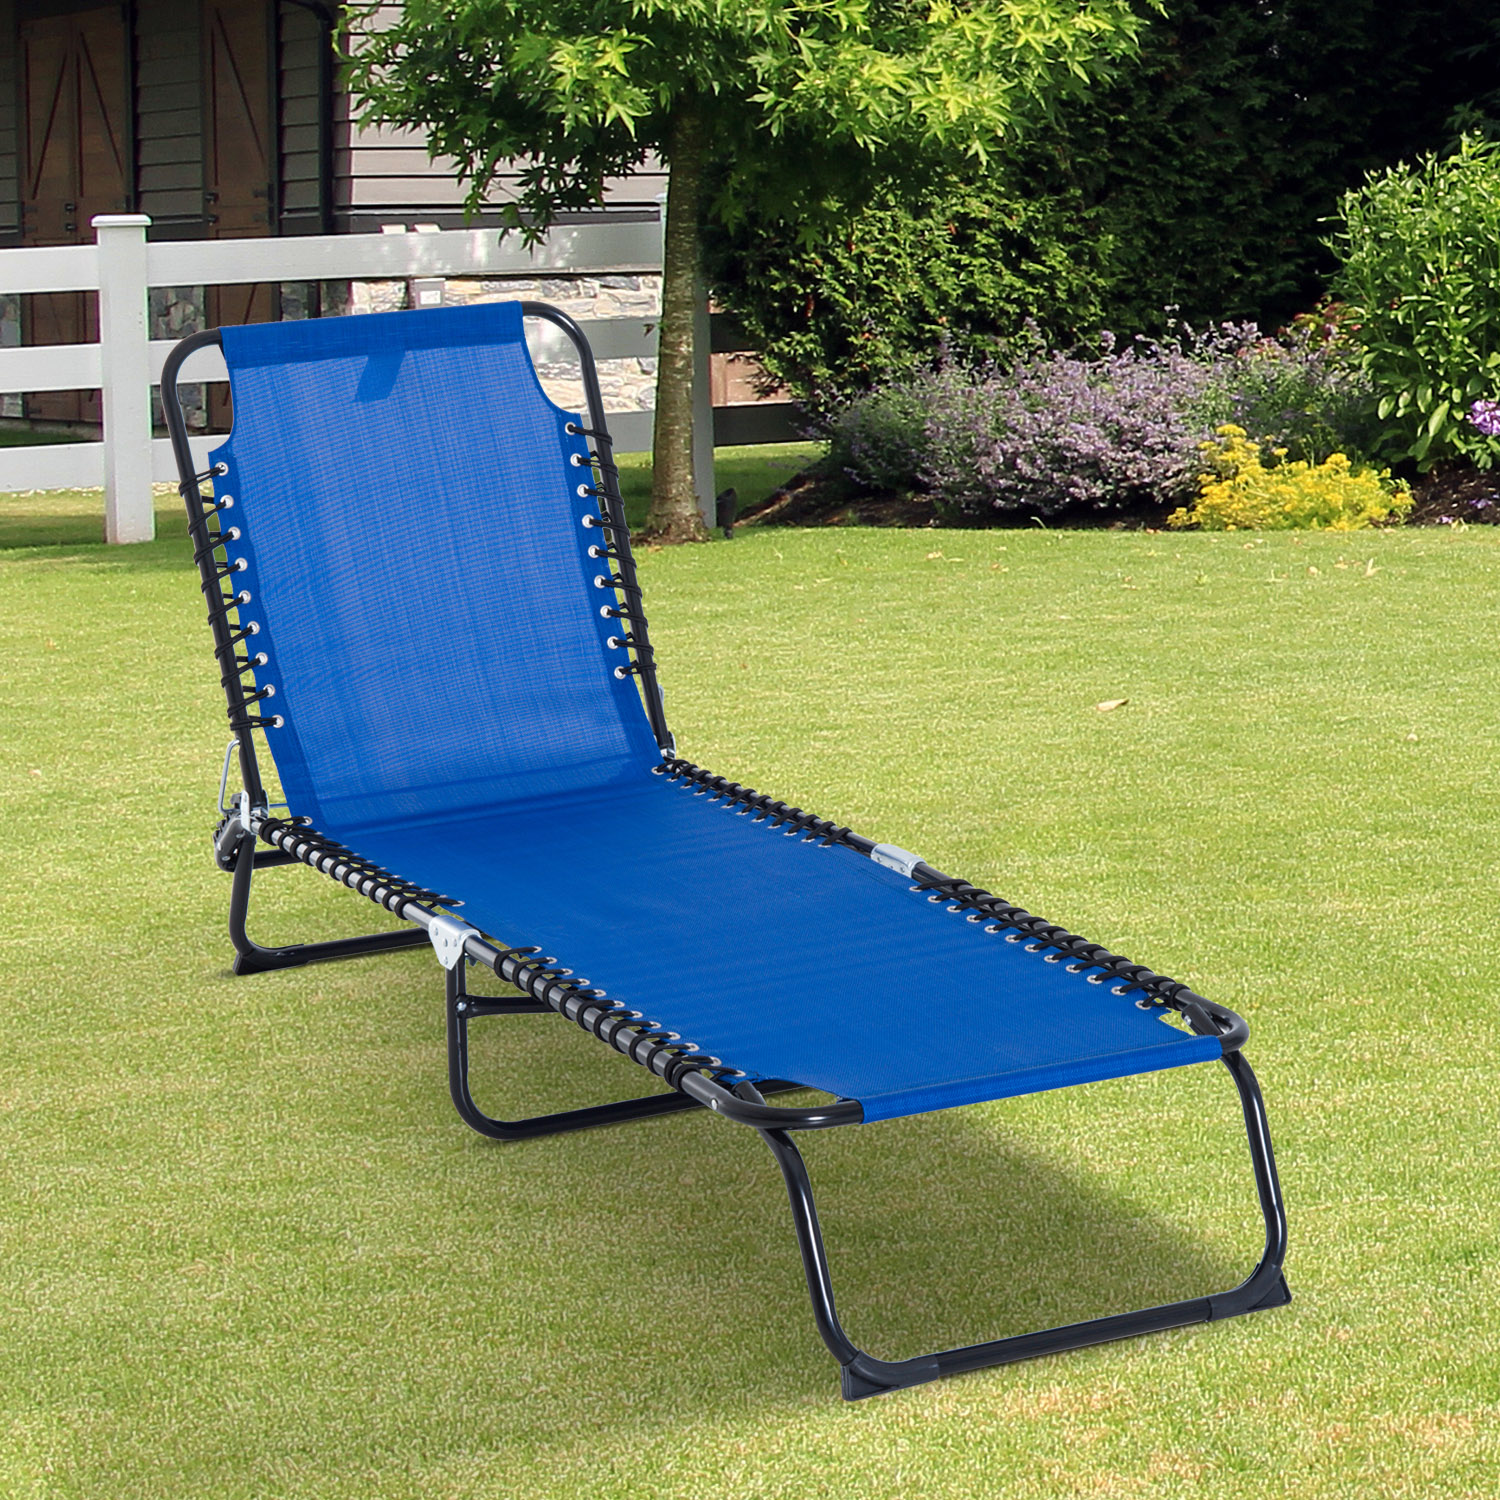 4-Position Reclining Beach Chair Chaise Lounge Folding Chair - Navy Blue